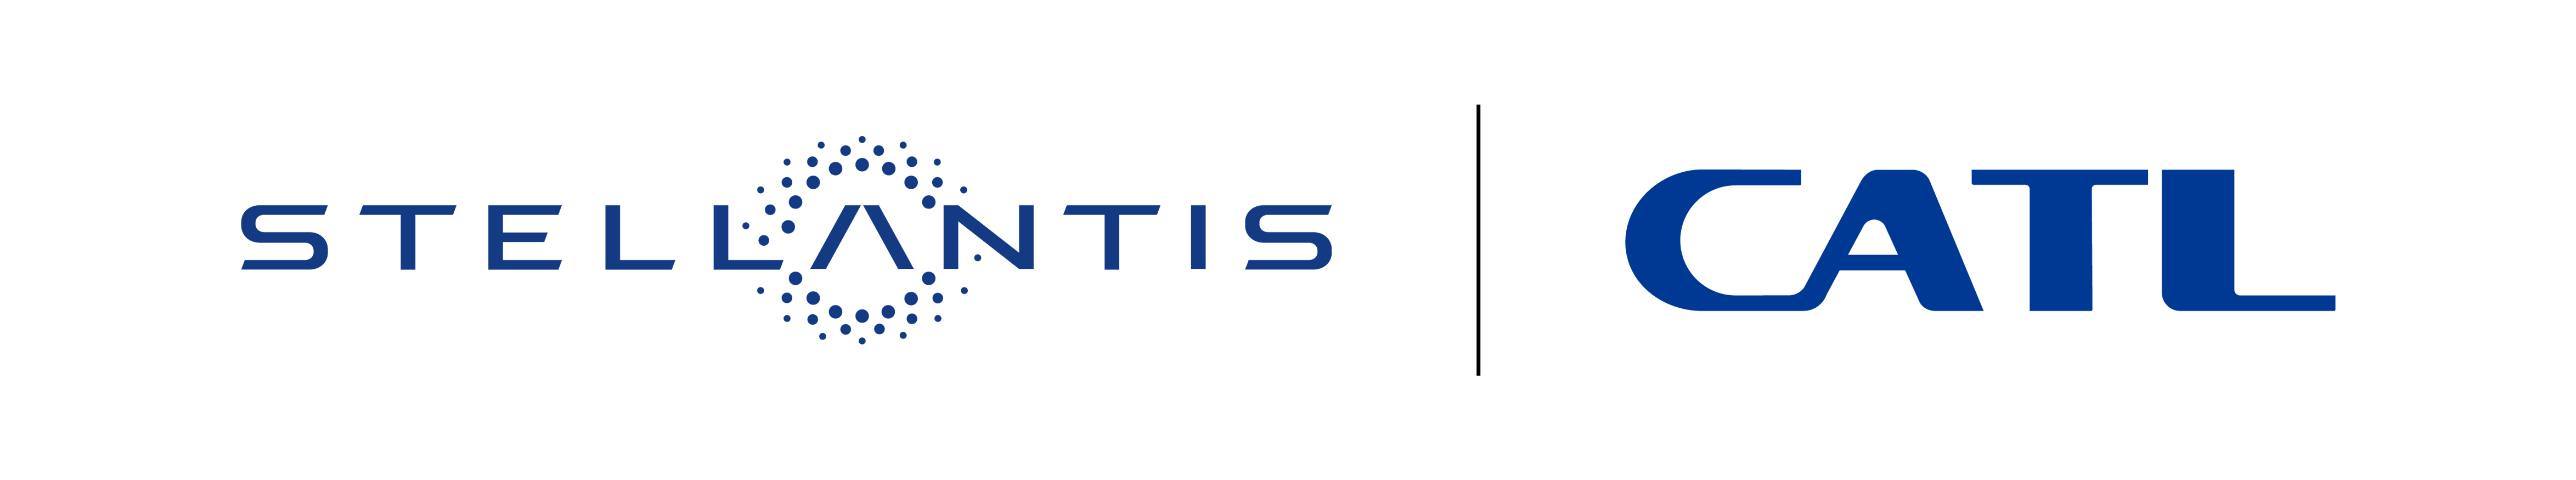 Image of Stellantis and CATL logo